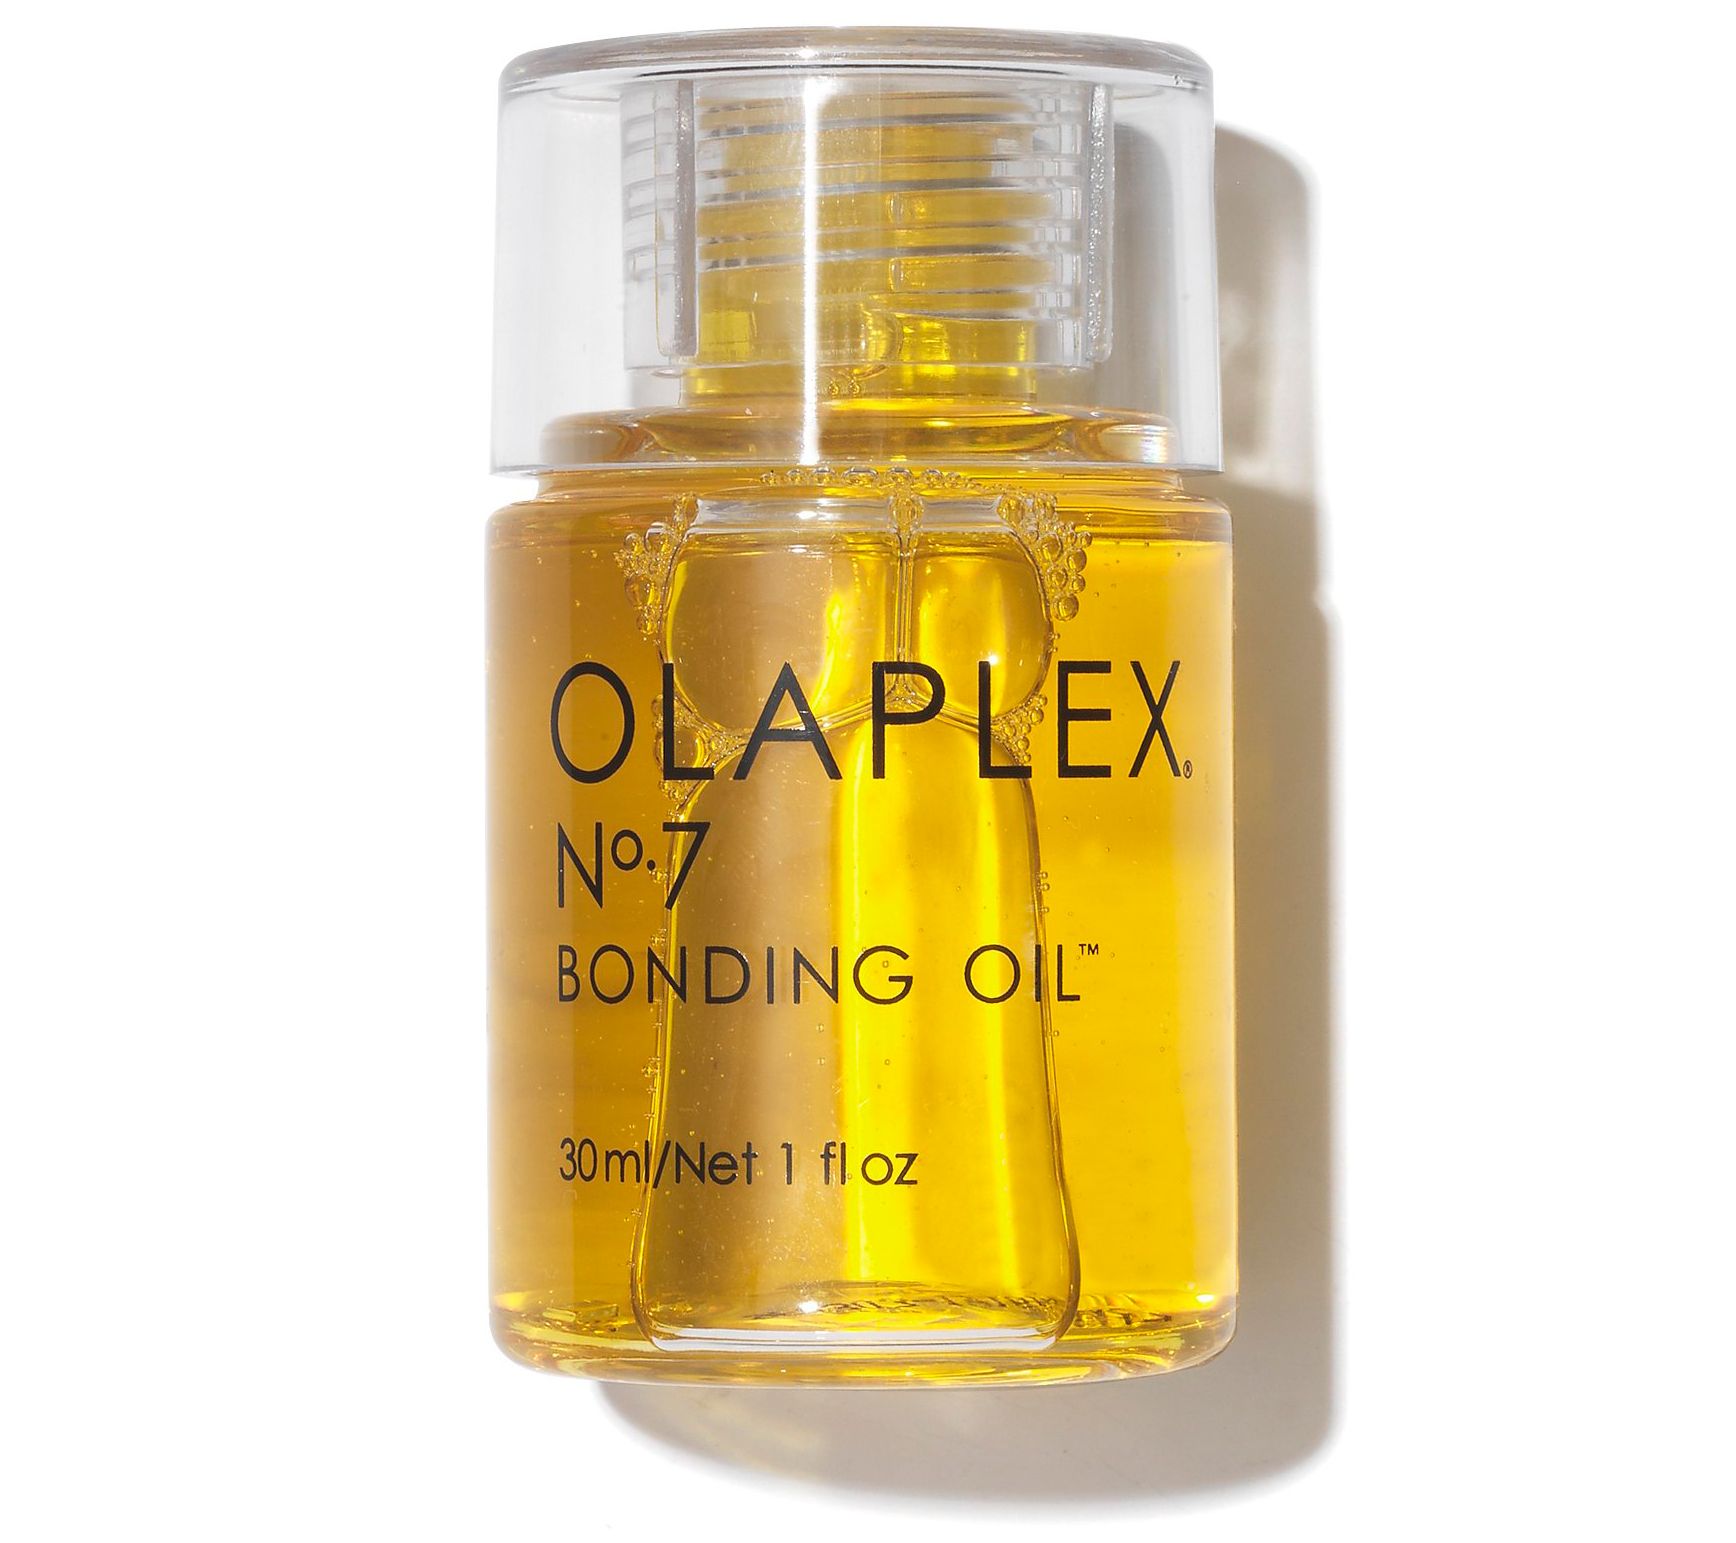 Is the Olaplex No 7 Bonding Oil worth purchasing?